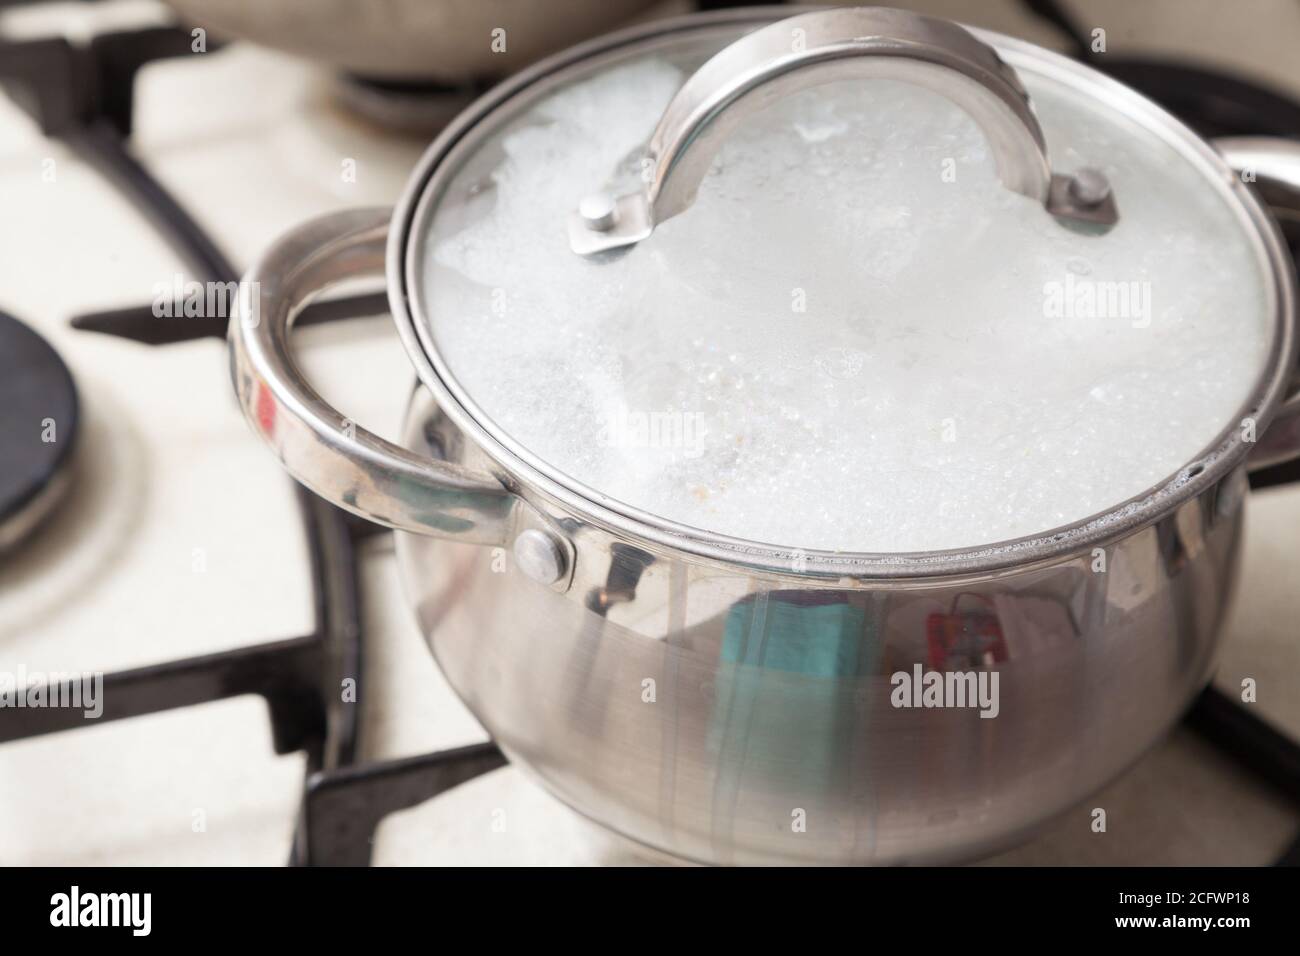 https://c8.alamy.com/comp/2CFWP18/closeup-of-cooking-pot-with-boiling-soup-2CFWP18.jpg